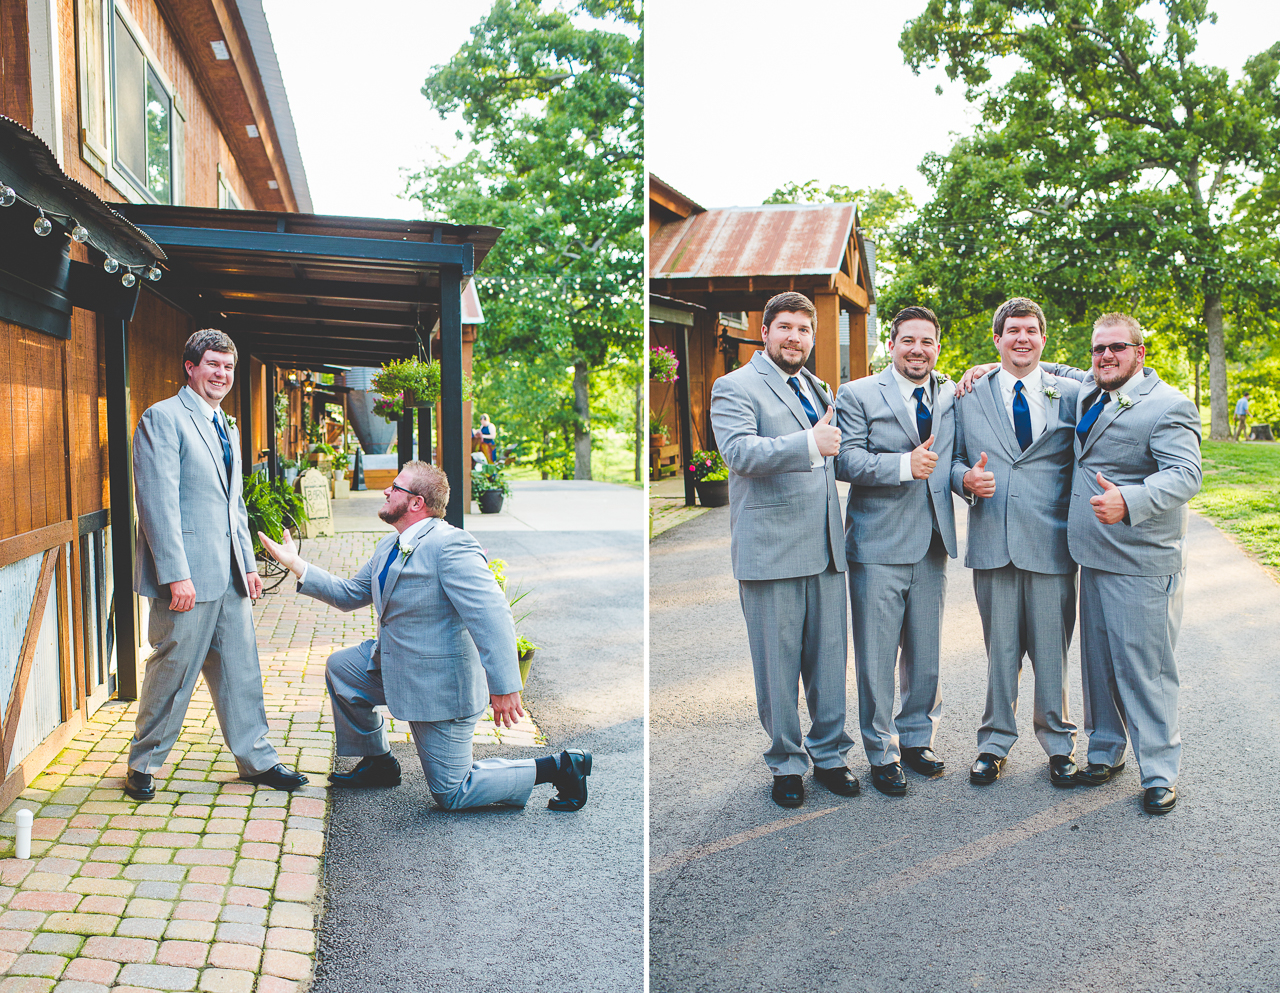 Happy Wedding Photographs in Fayetteville, Arkansas